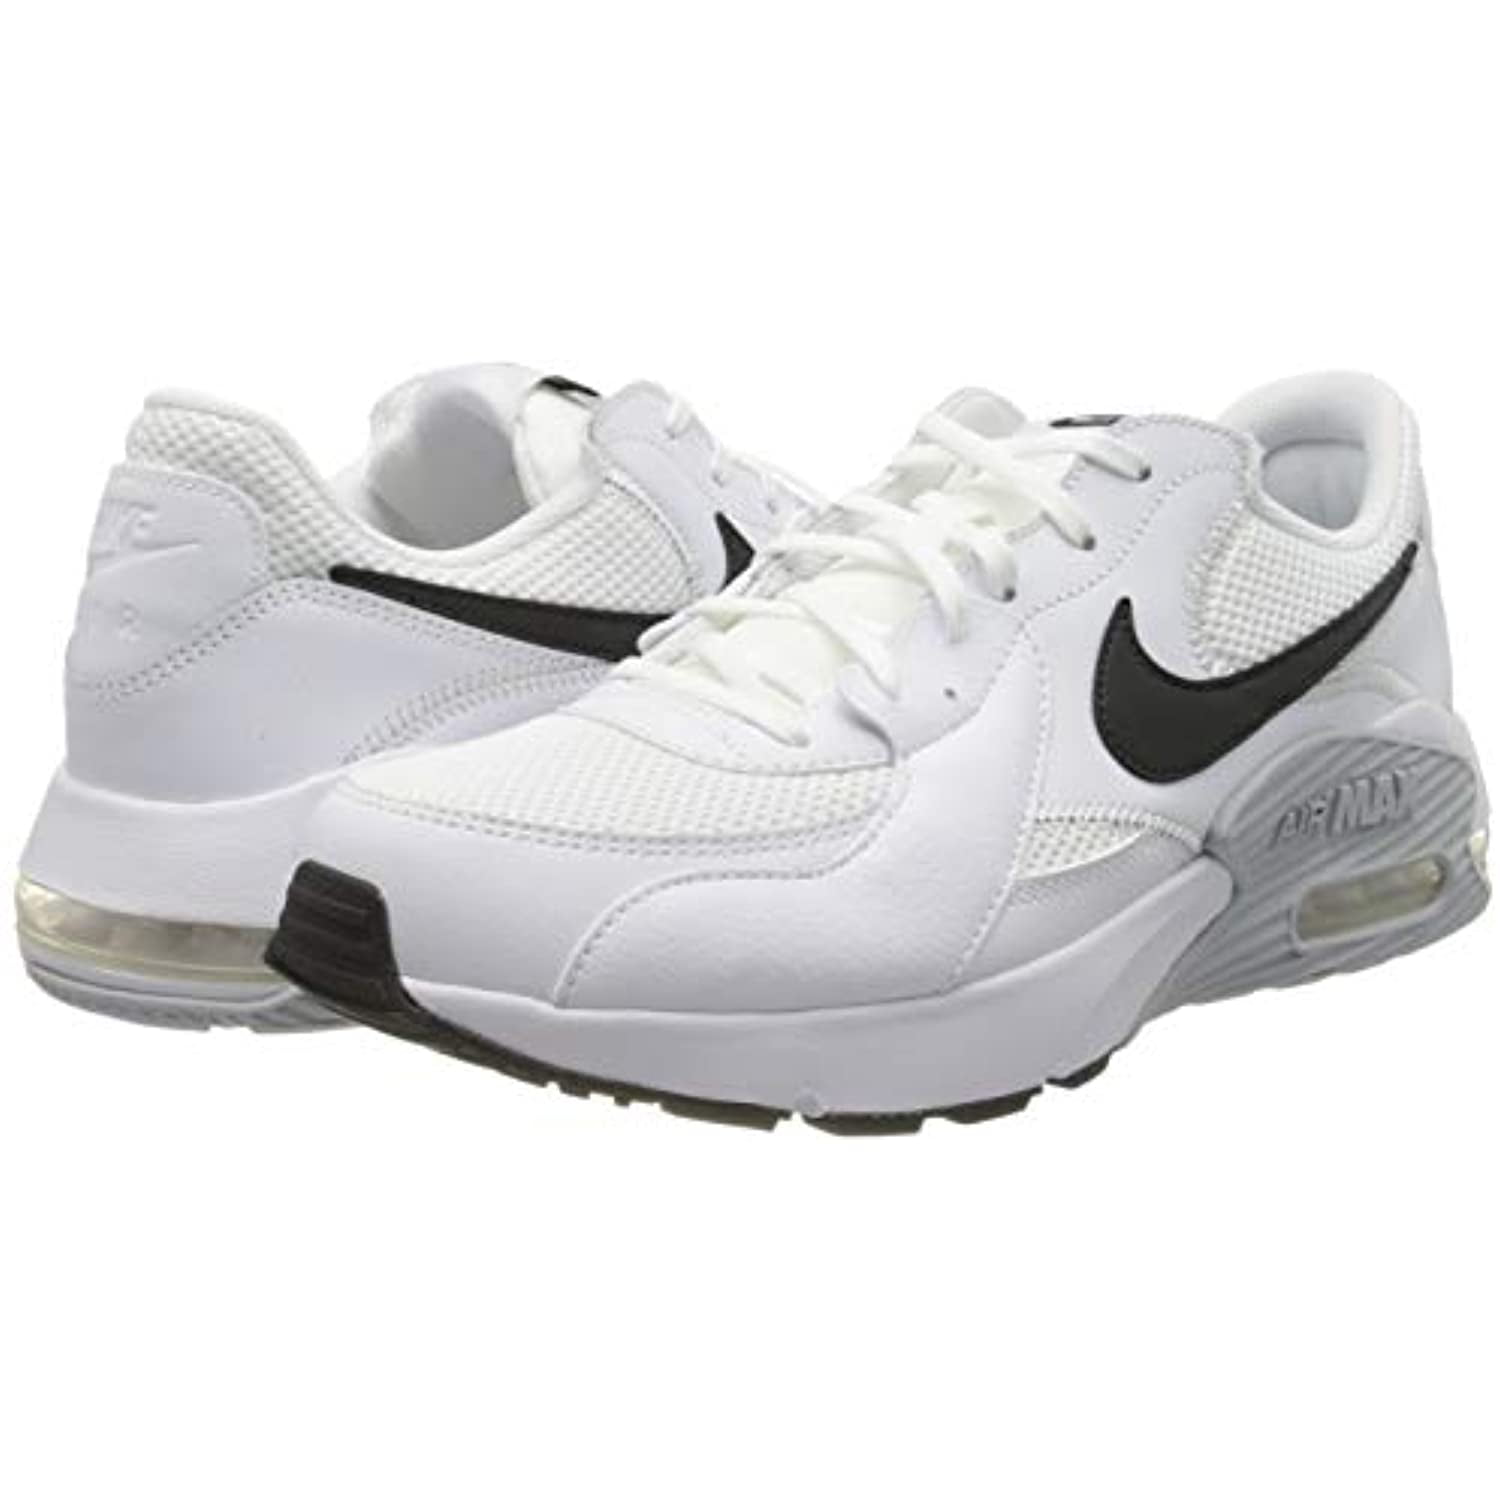 Nike Men's Air Max Excee Running Shoe, White/Black/Pure Platinum, 11.5 D (M)